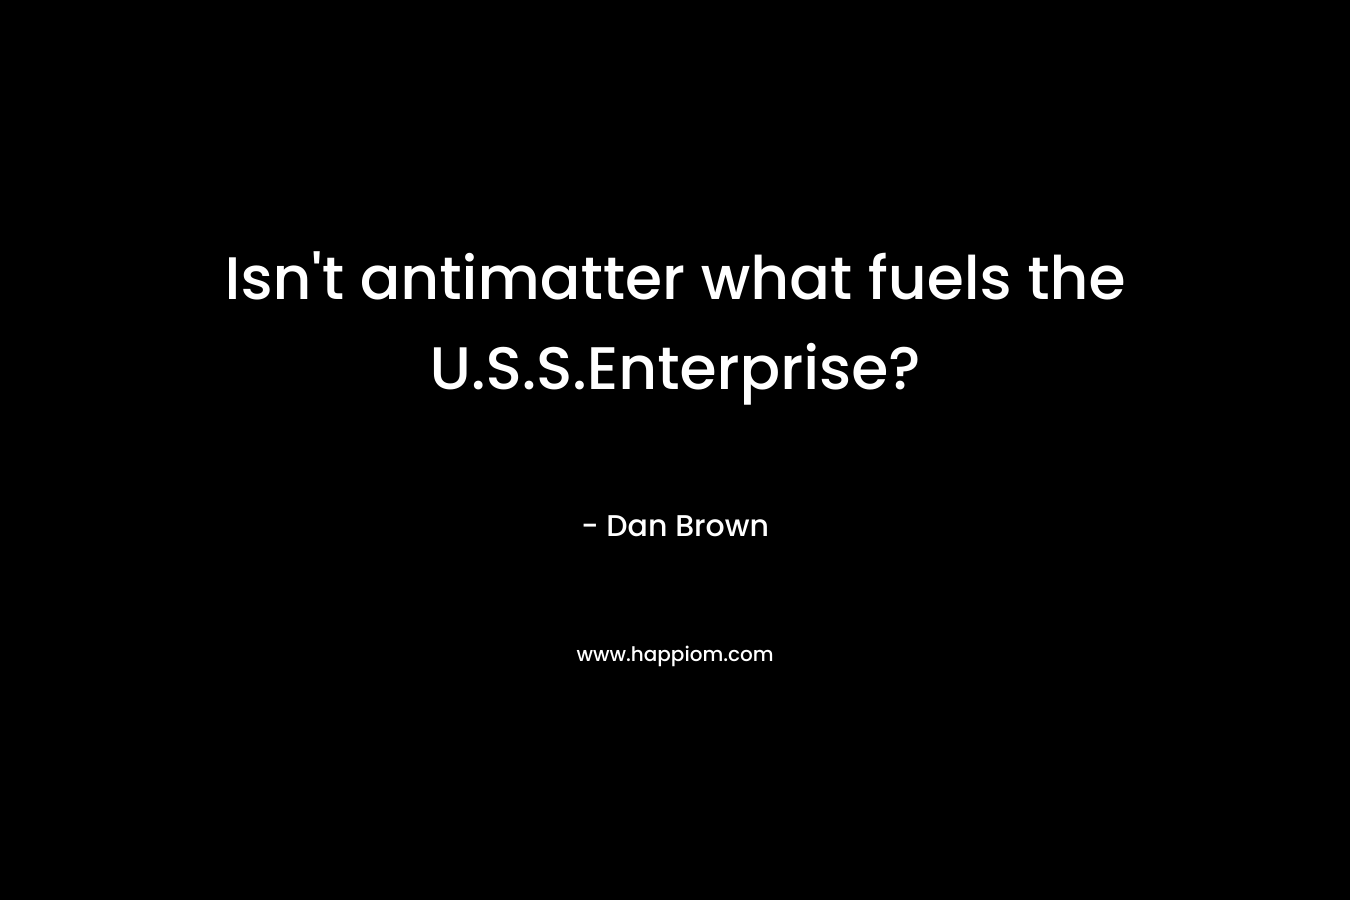 Isn't antimatter what fuels the U.S.S.Enterprise?